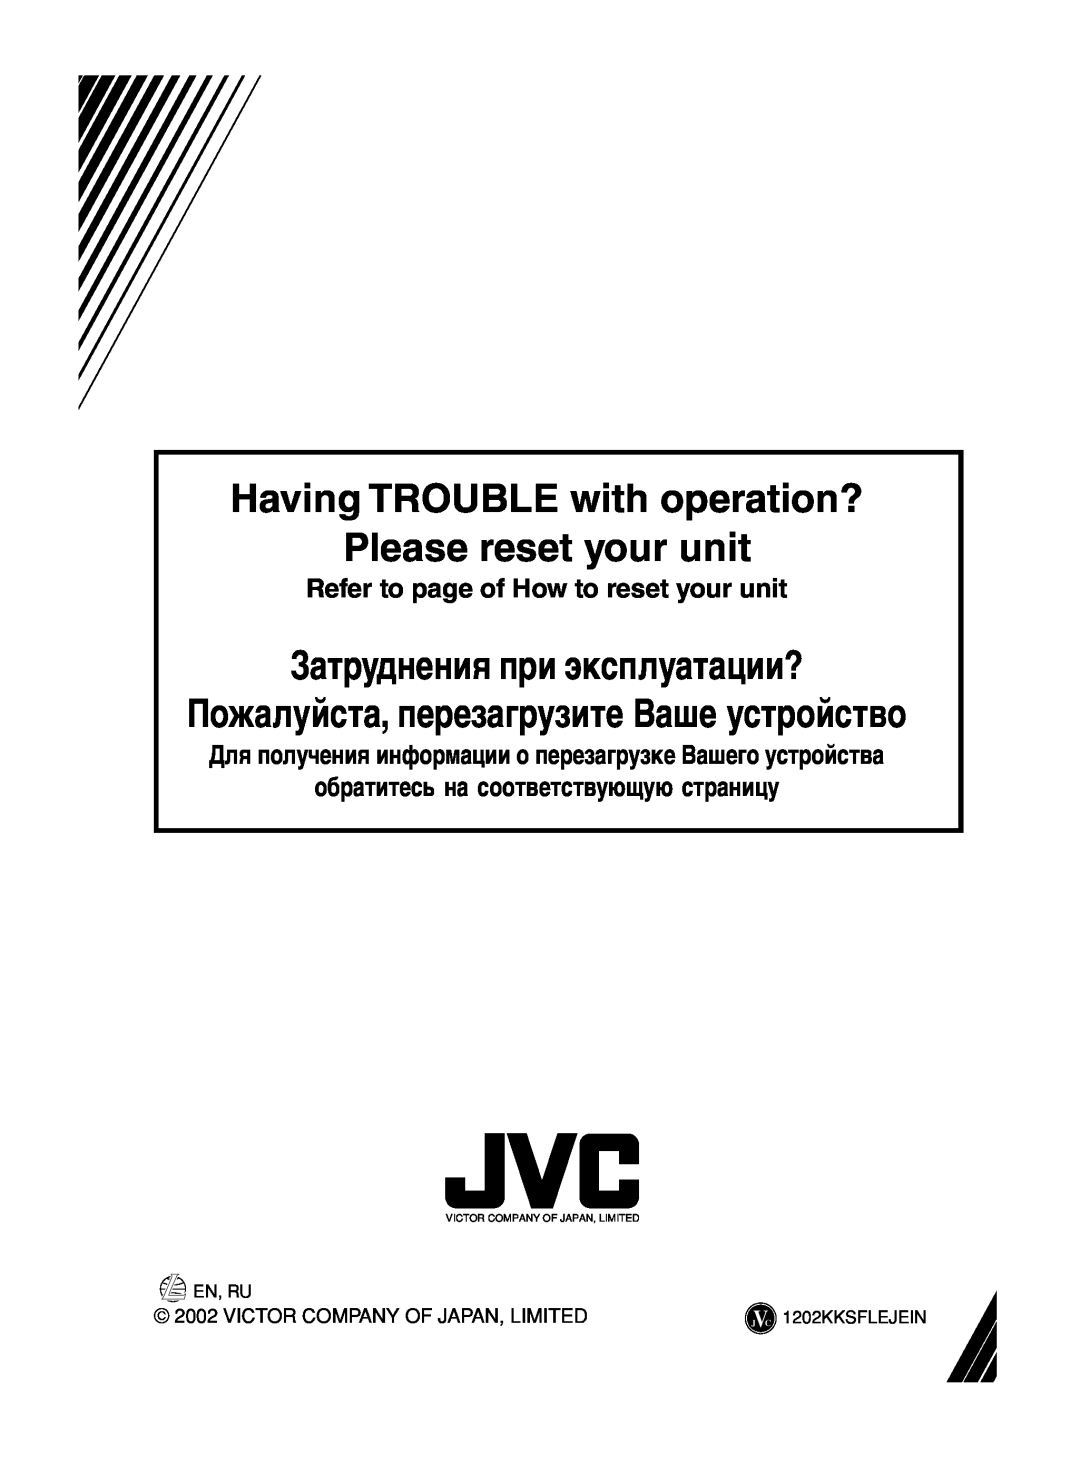 JVC KS-F545 Having TROUBLE with operation?, Please reset your unit, Затруднения при эксплуатации?, J C 1202KKSFLEJEIN 